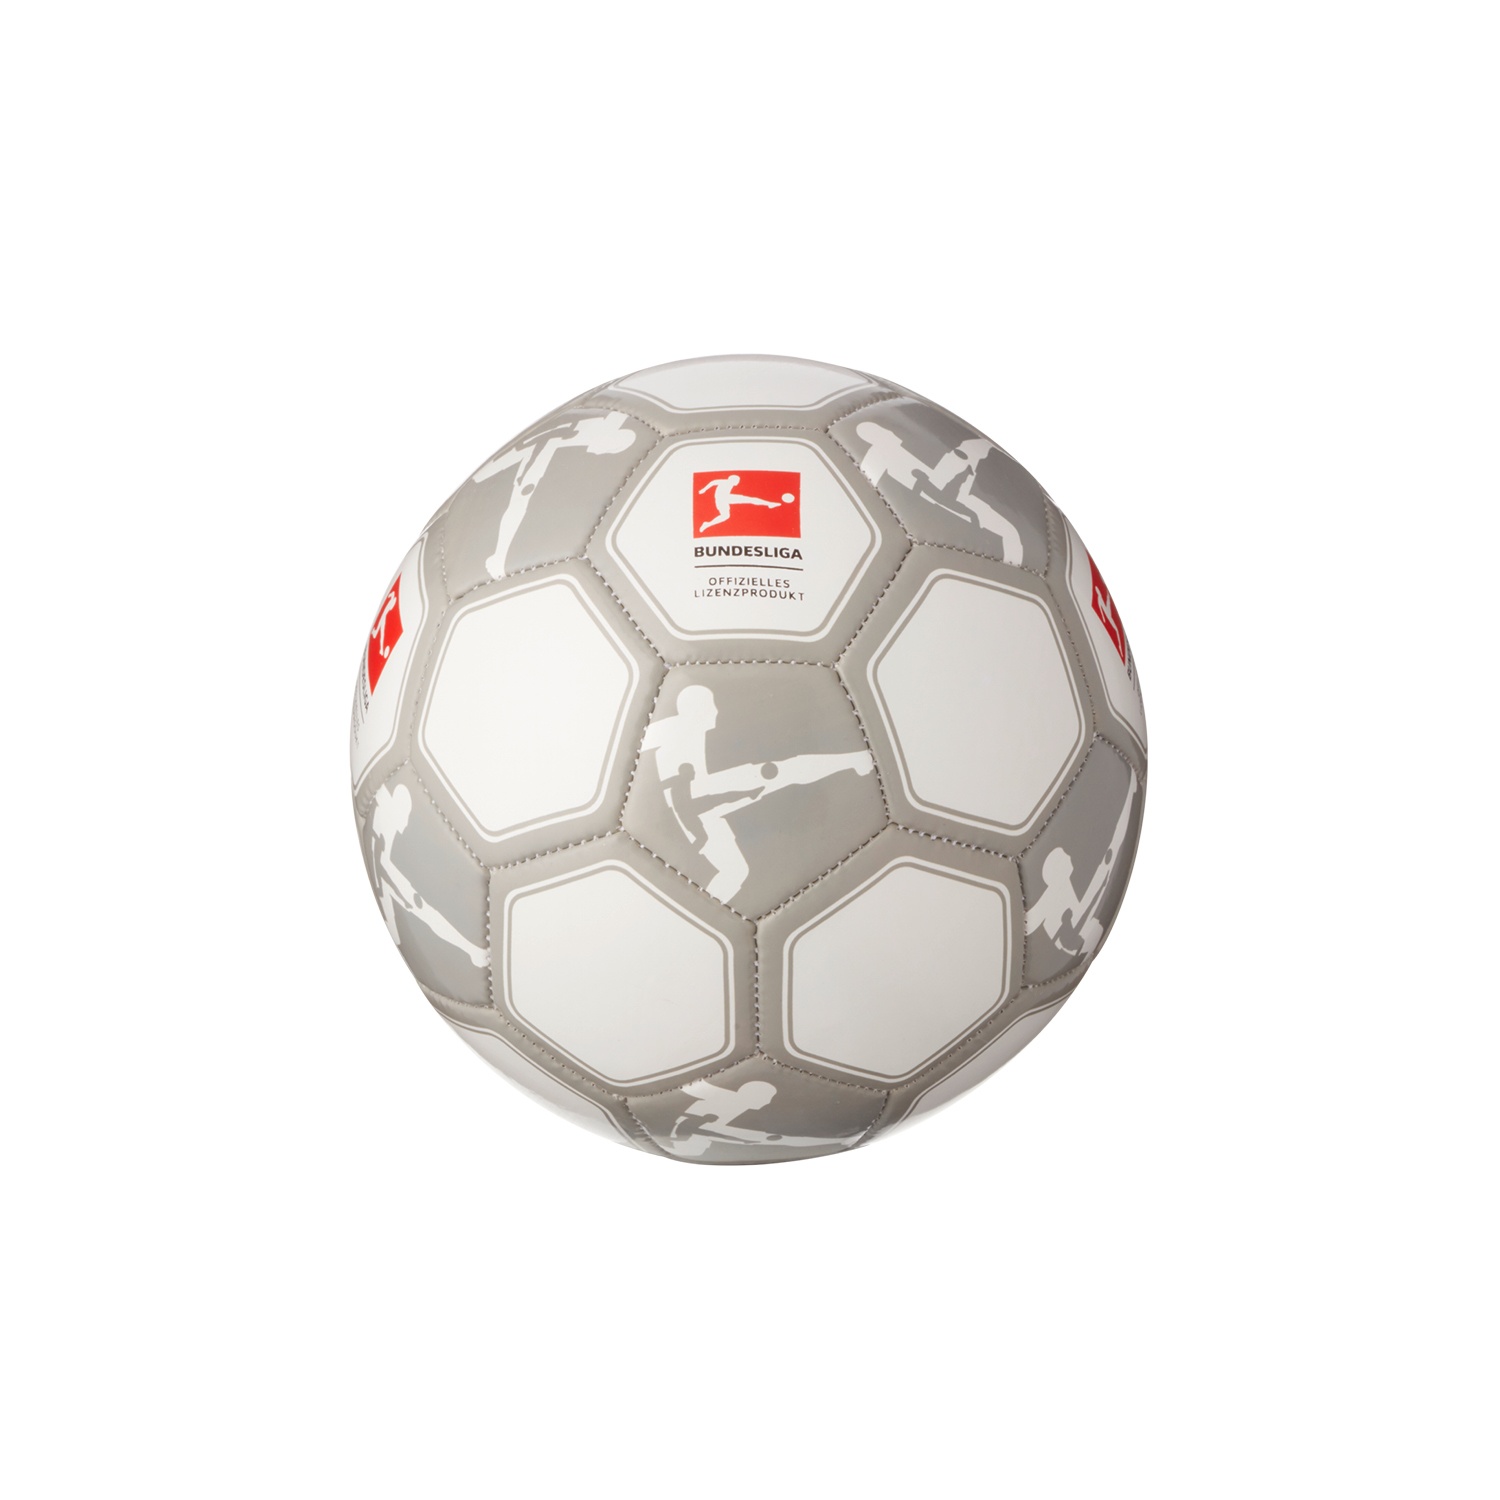 Bundesliga Miniball